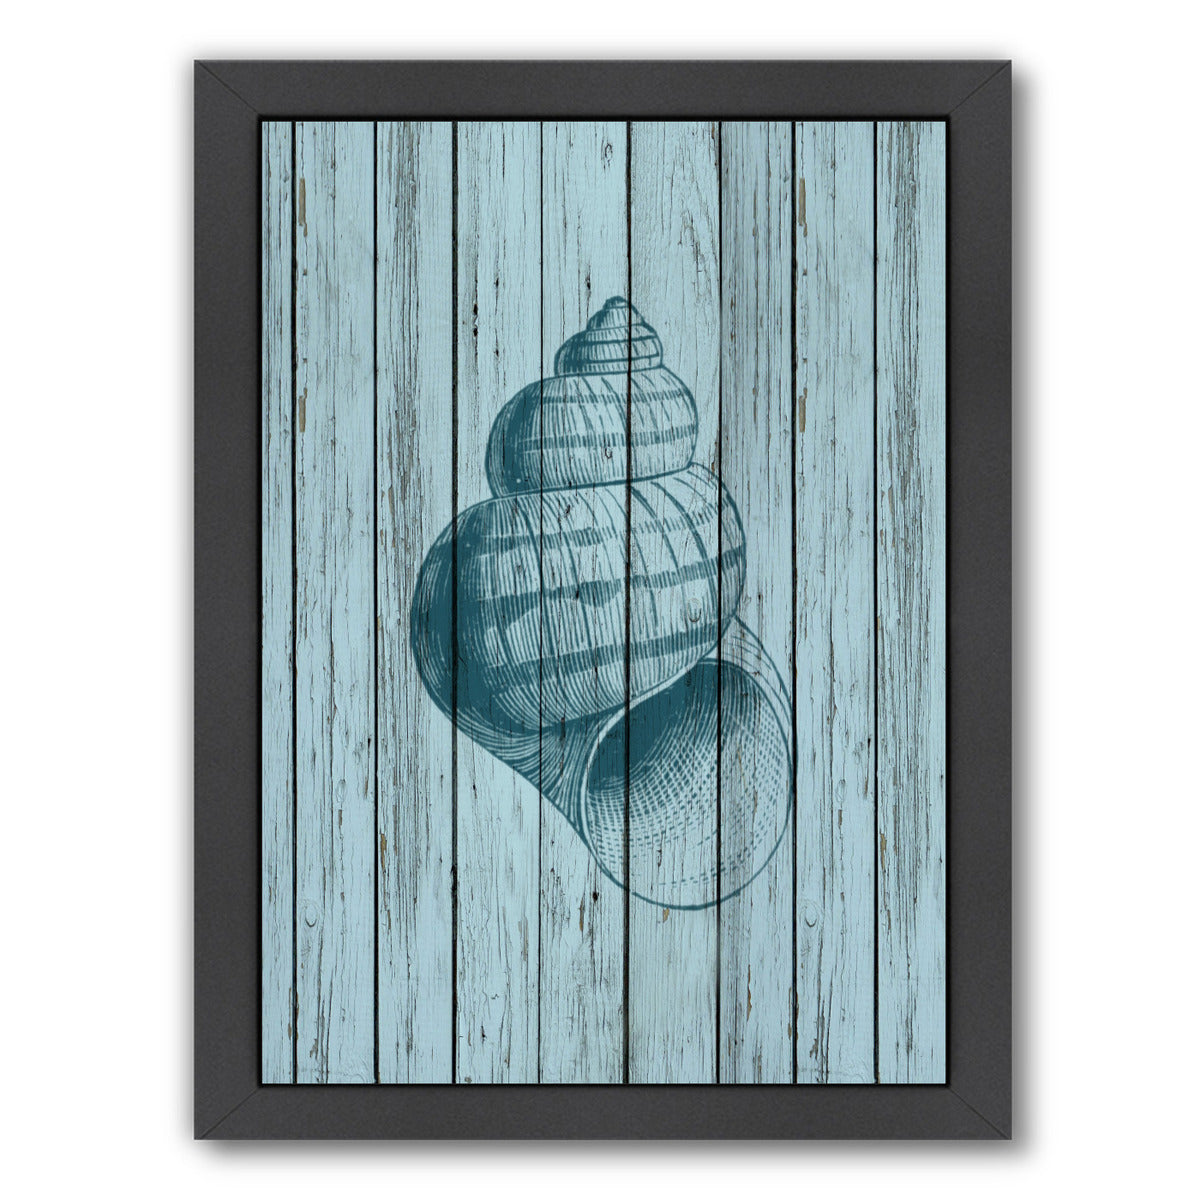 Wood Shell 3 by Samantha Ranlet Framed Print - Americanflat